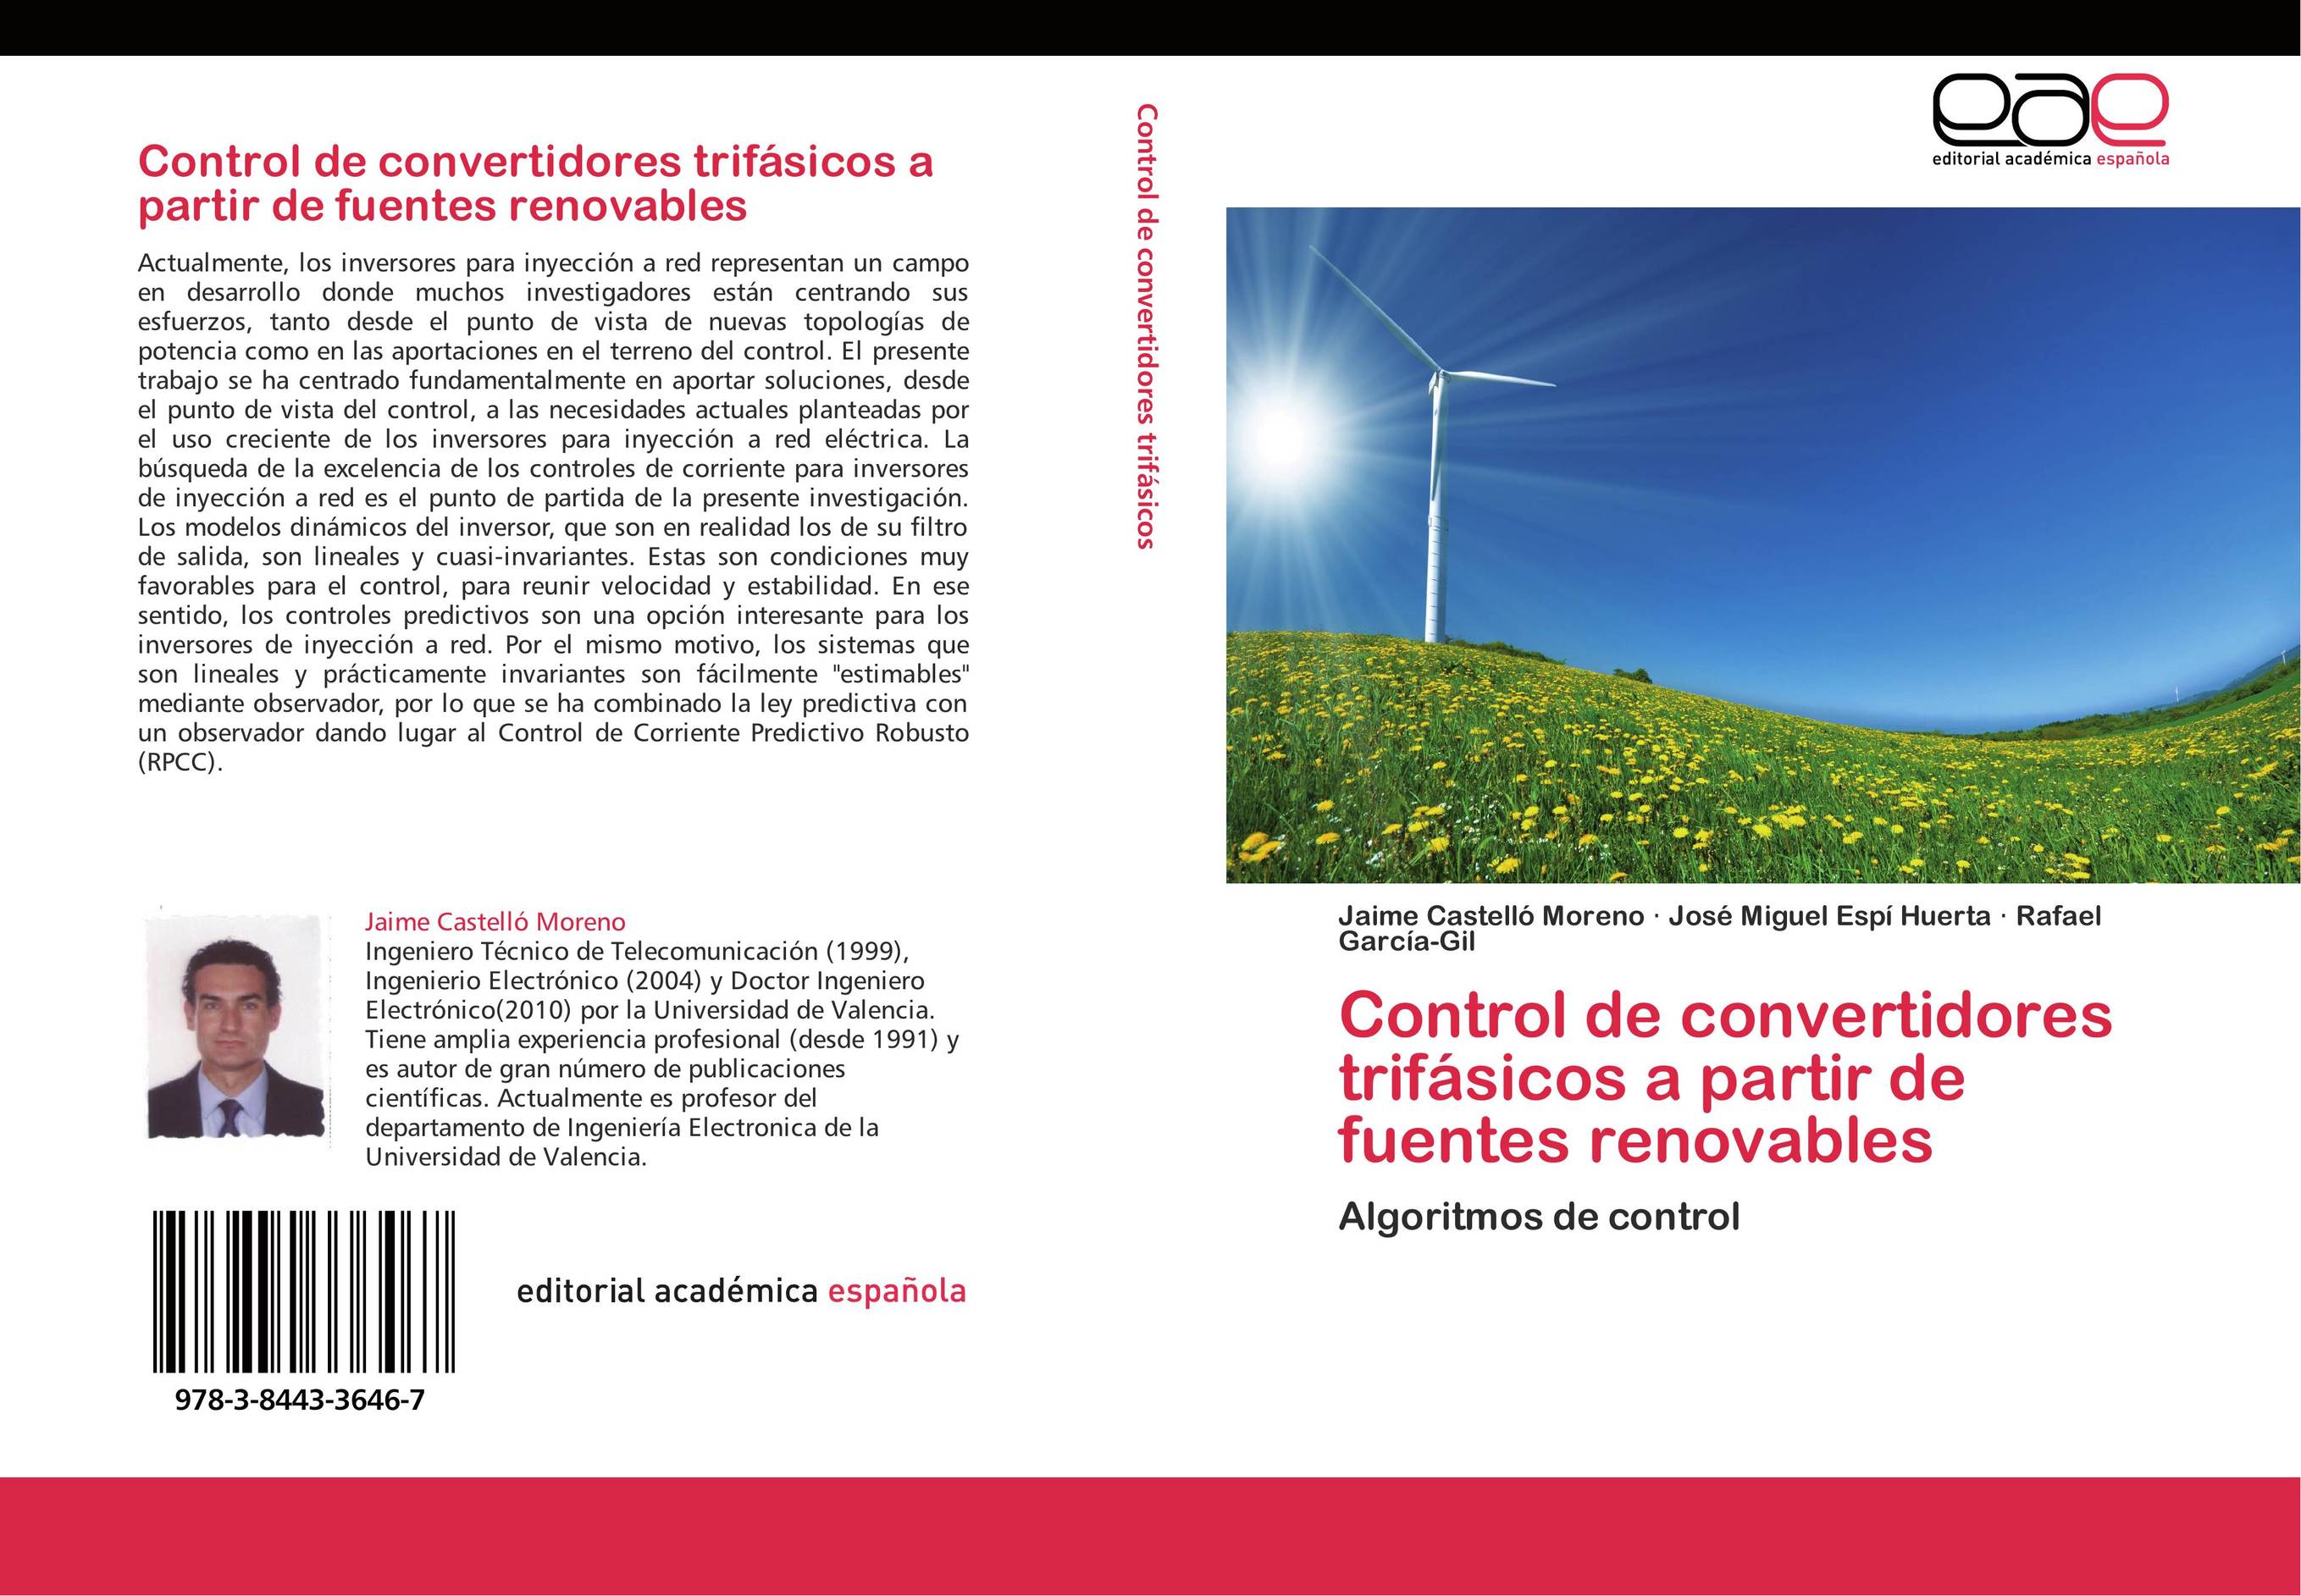 Control de convertidores trifásicos a partir de fuentes renovables